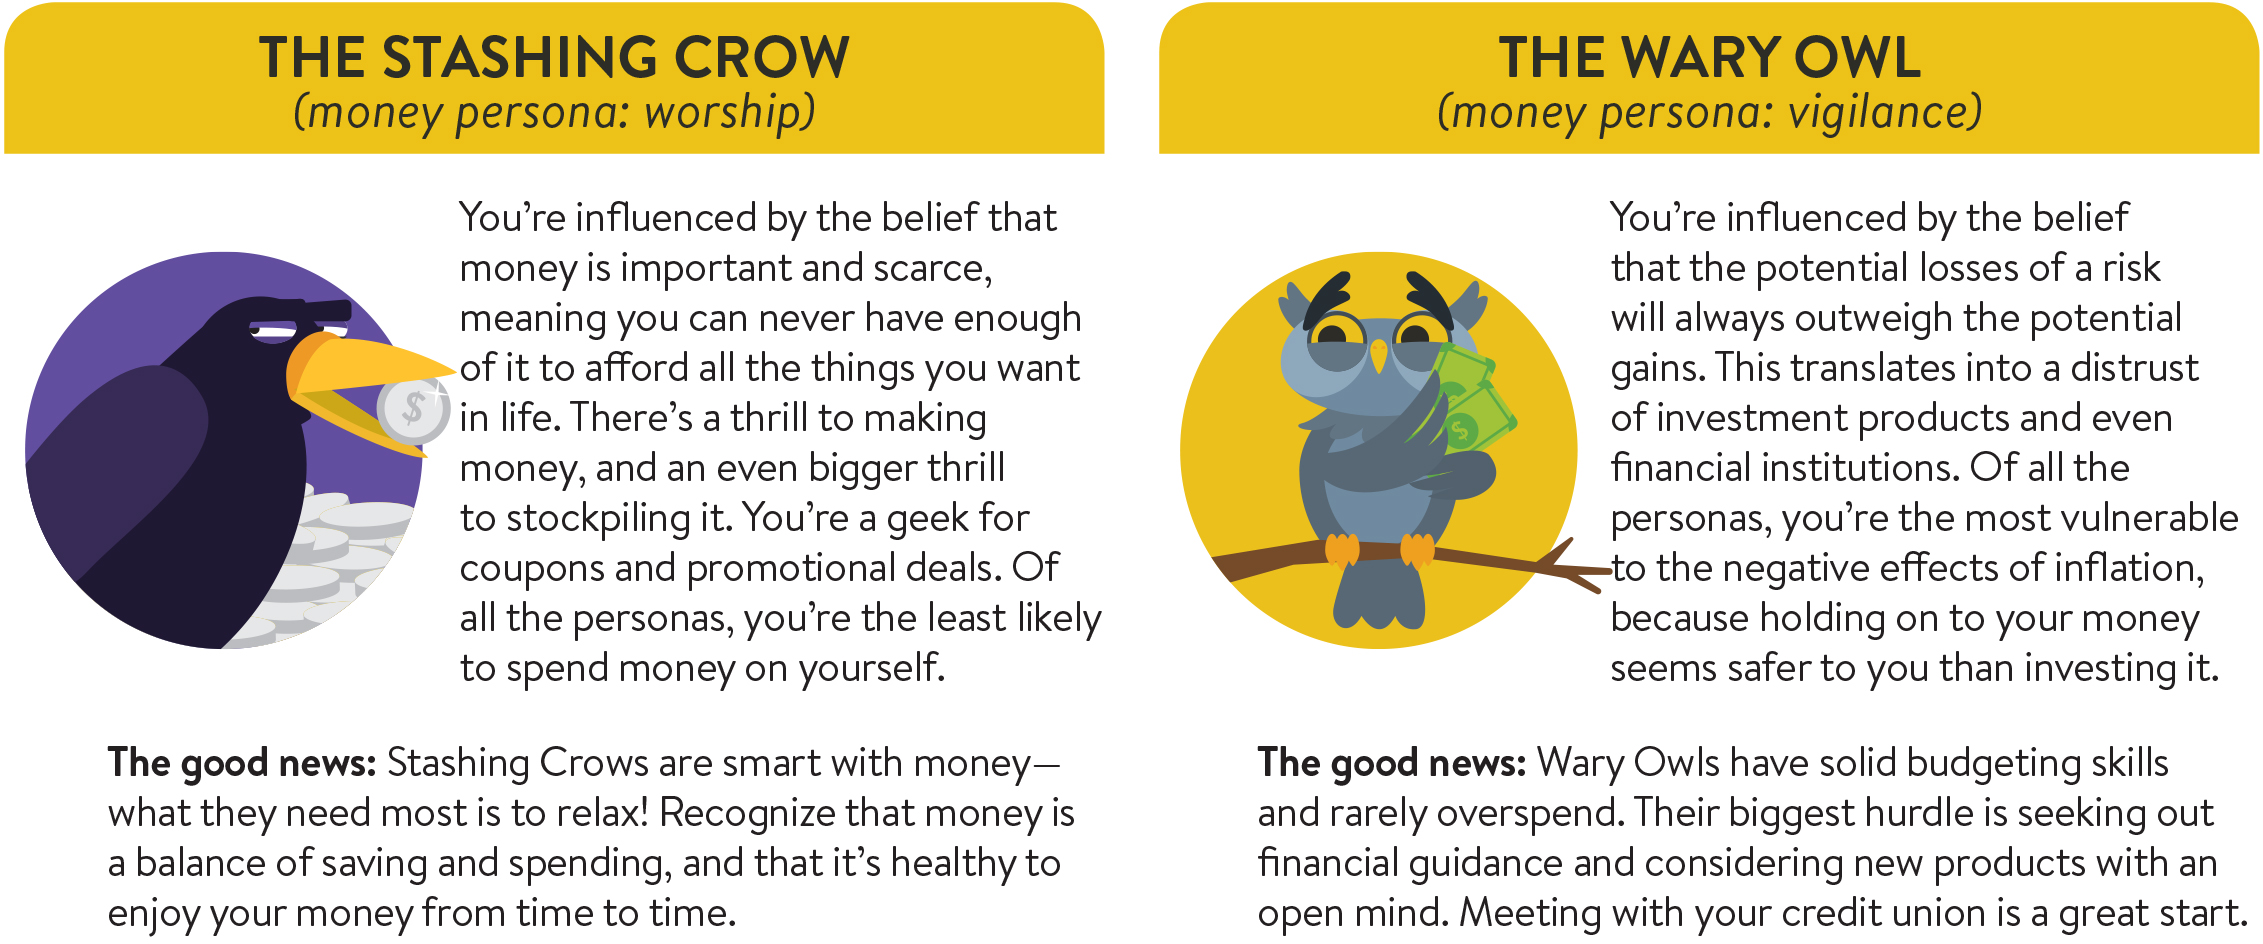 Money Personas: Stashing Crow and Wary Owl